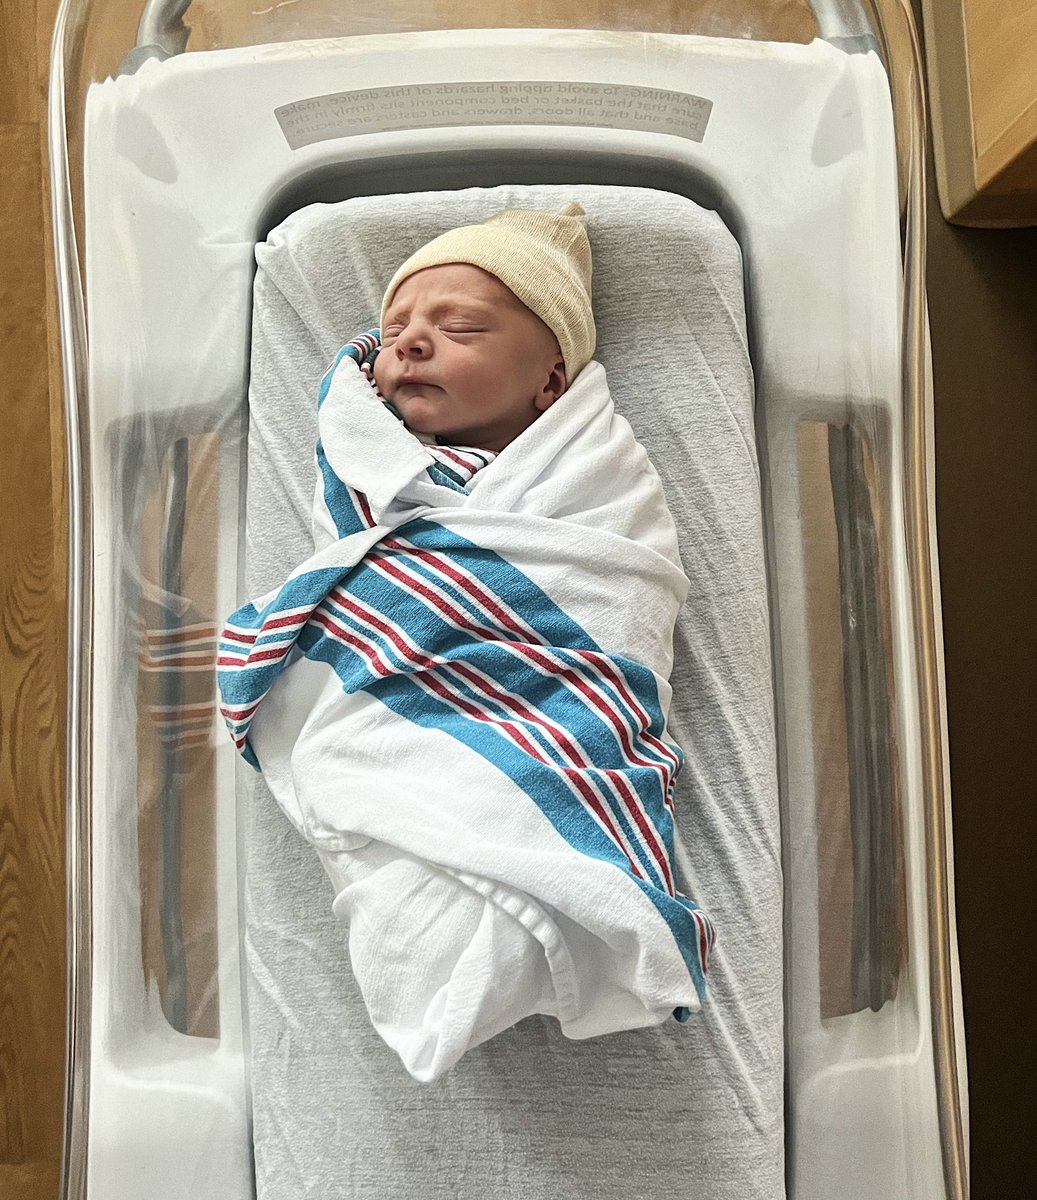 RT @jakemcatee: My son, Wilbur David McAtee, was born today. https://t.co/Pt9659albH